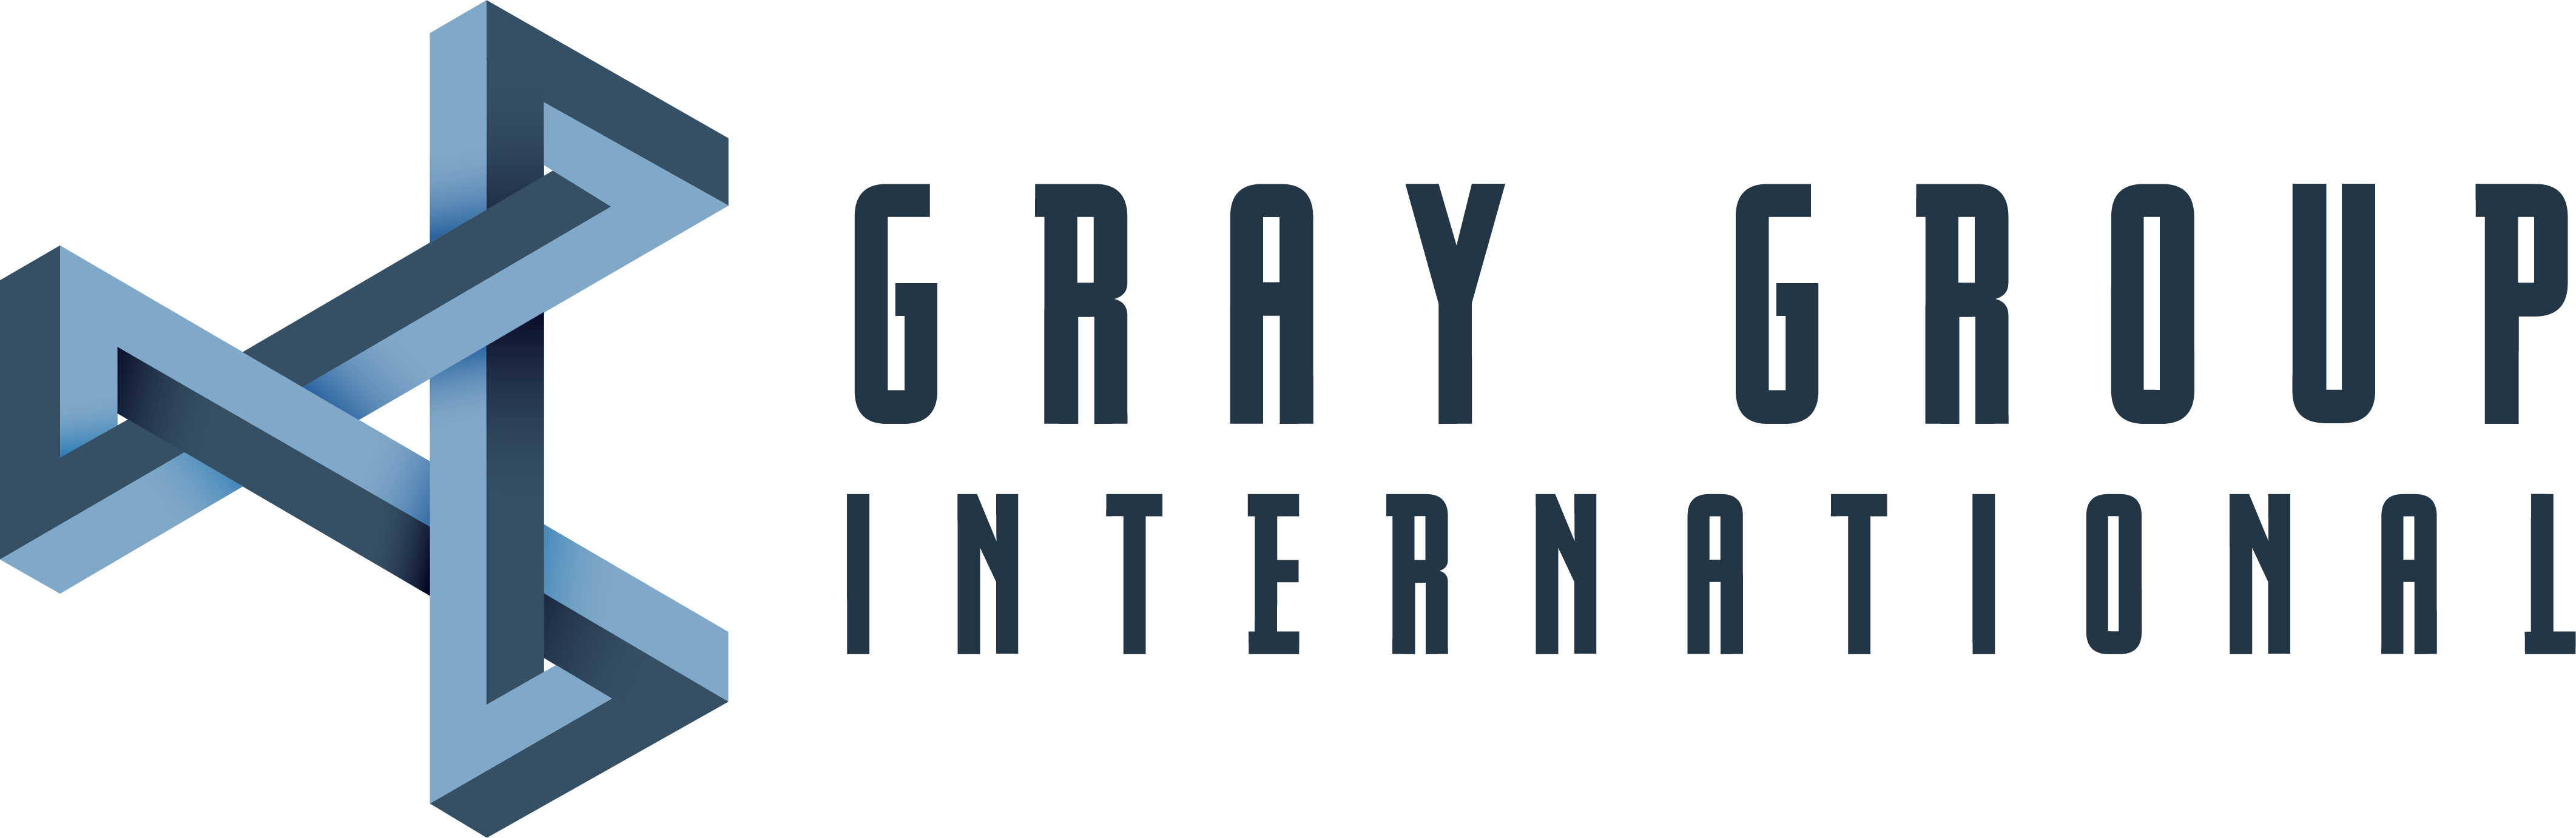 ggi logo email